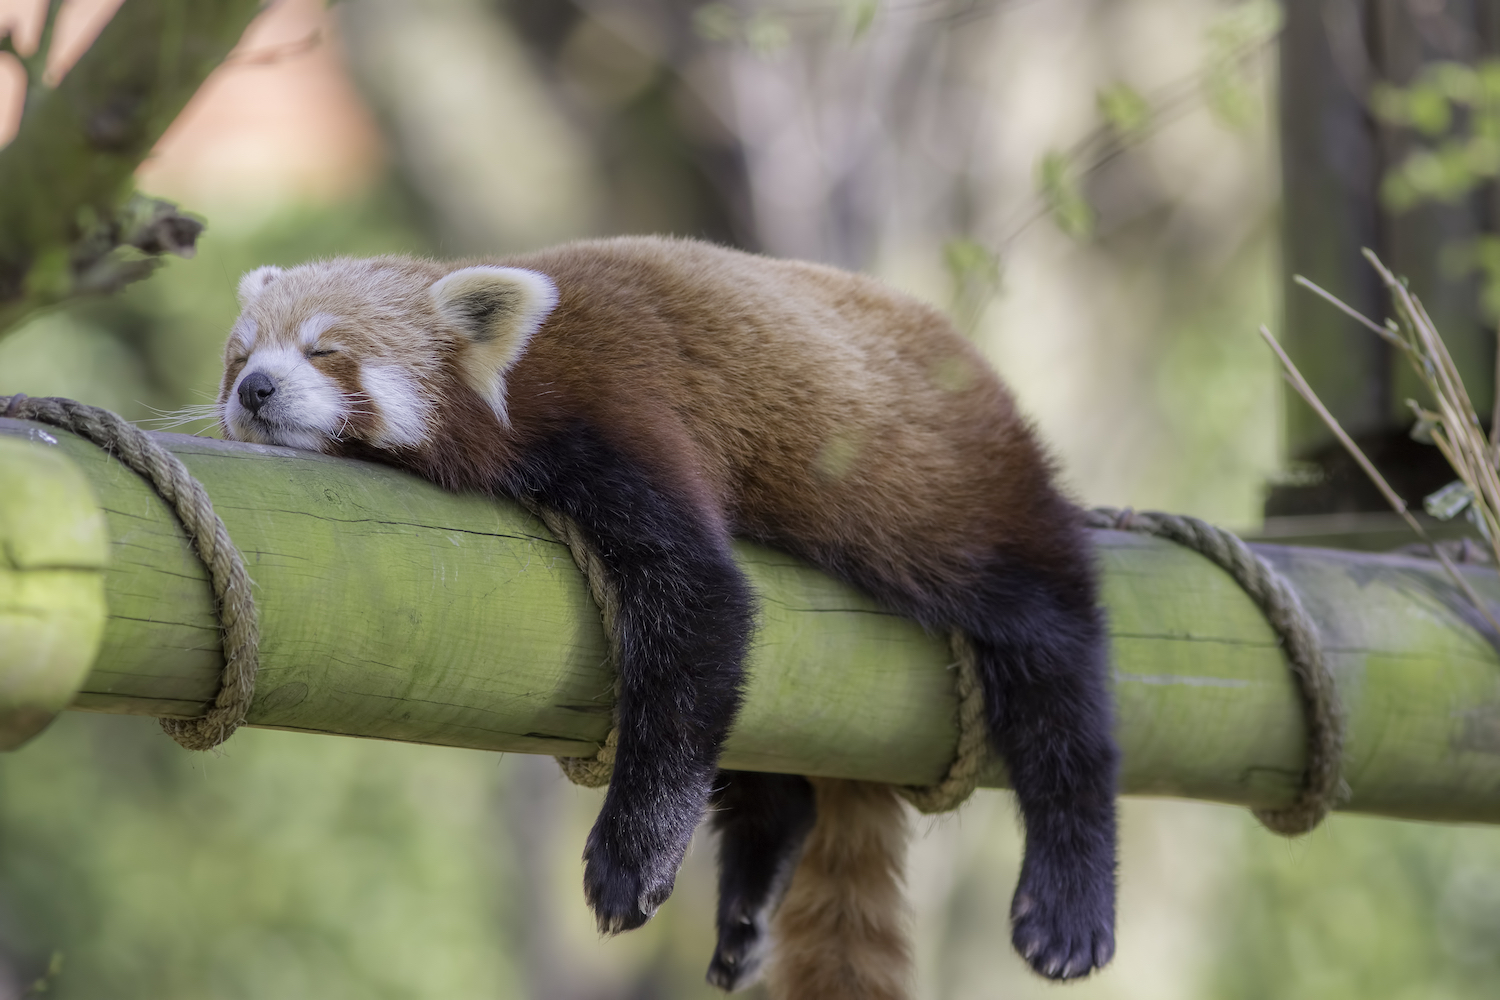 Can animals survive on less sleep?